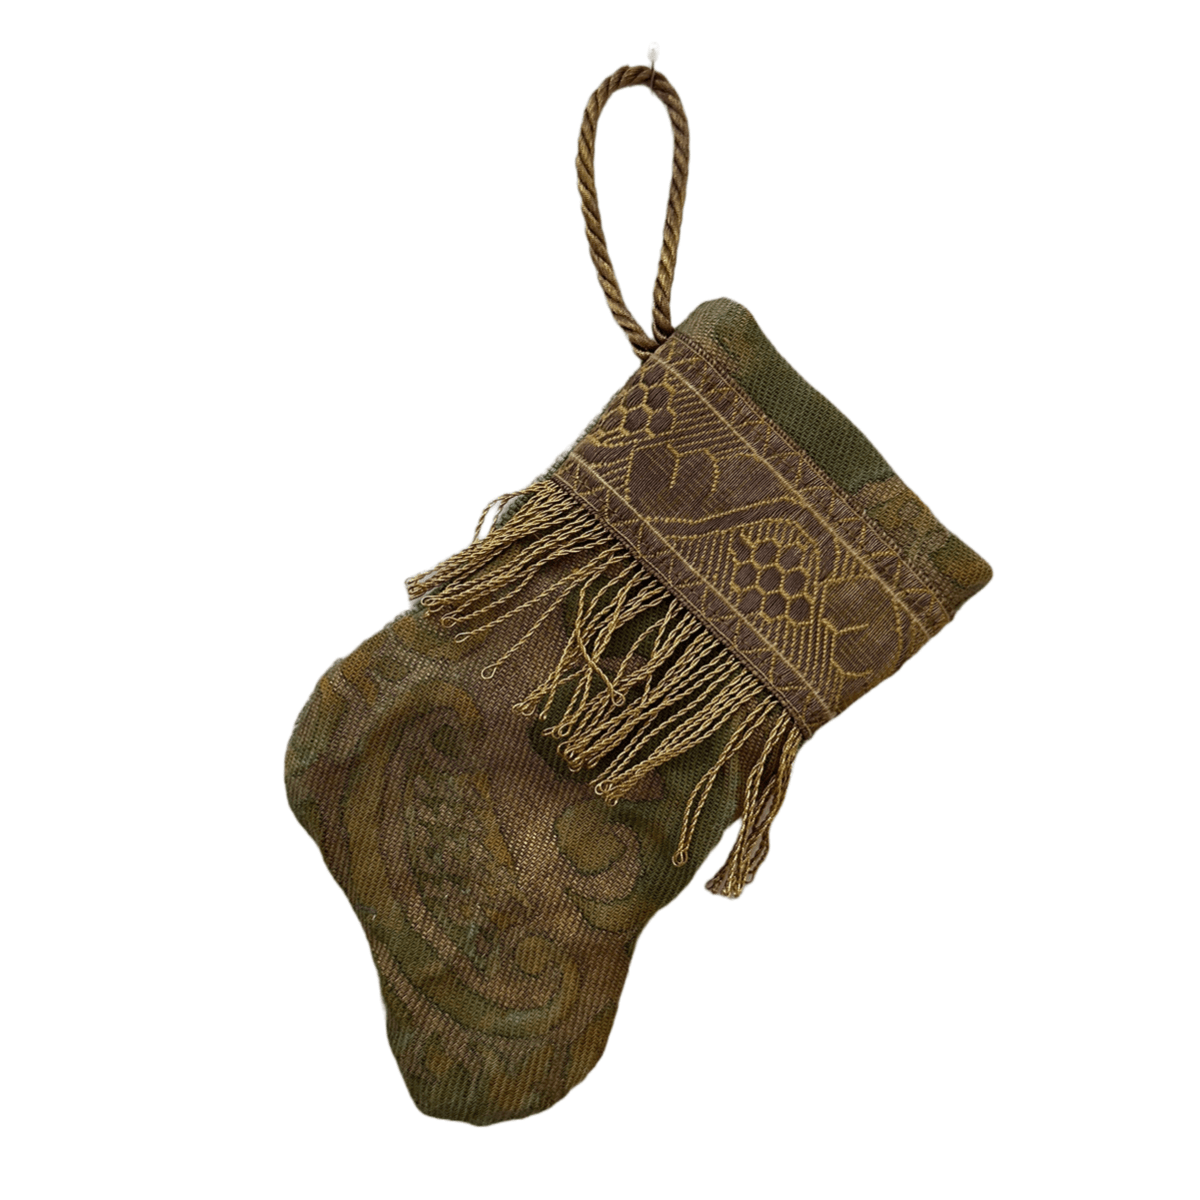 Handmade Mini Stocking Ornament from Antique & Vintage Textiles, Trims | Green Fortuny Ornament B. Viz Design F 